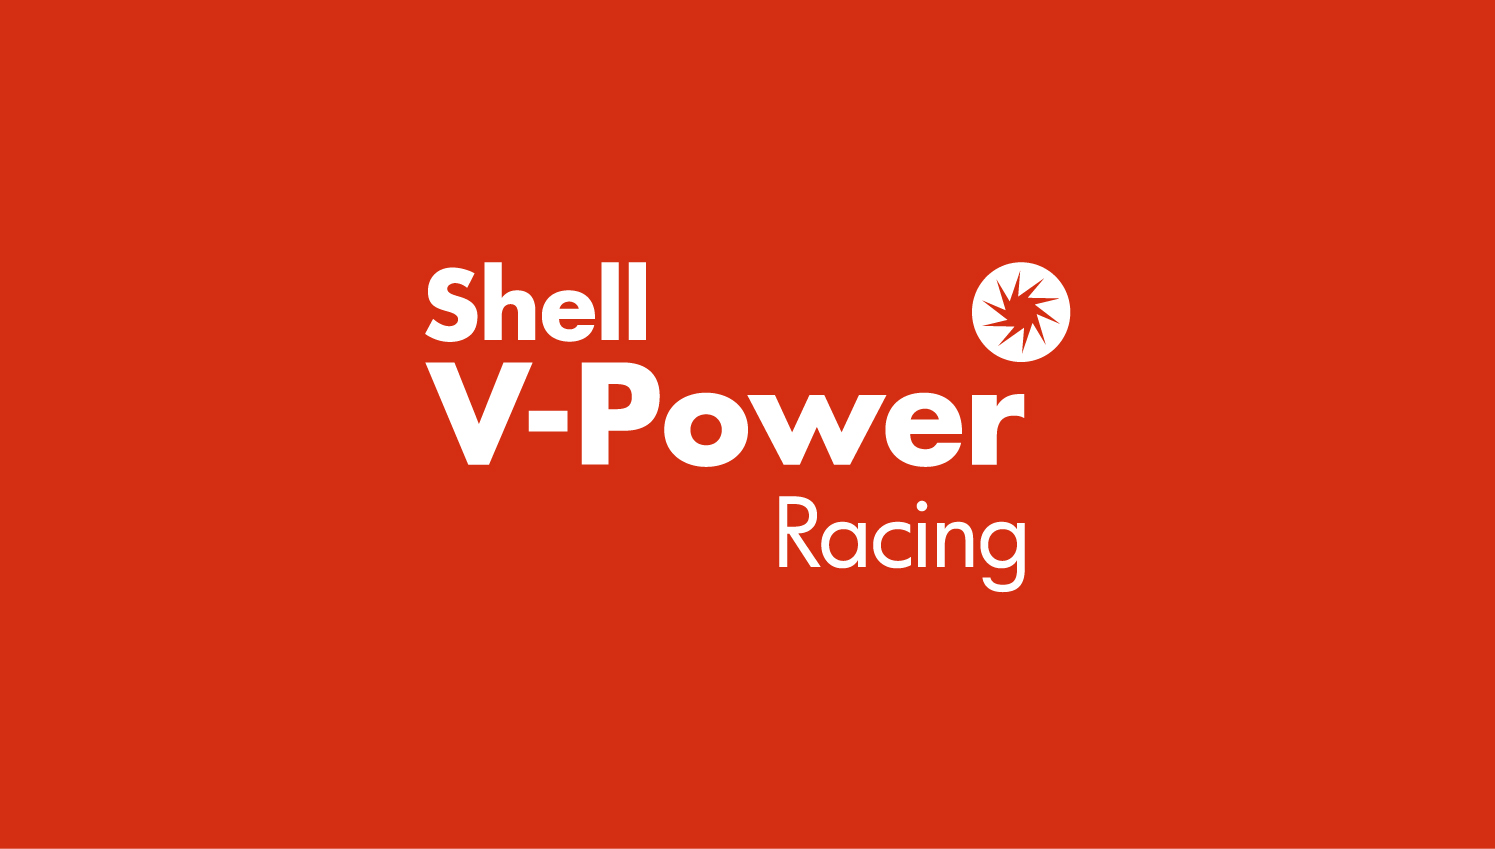 Пауэр шелл. Shell v-Power. Shell Power Diesel. Shell Diesel v-Power. Shell v-Power реклама.